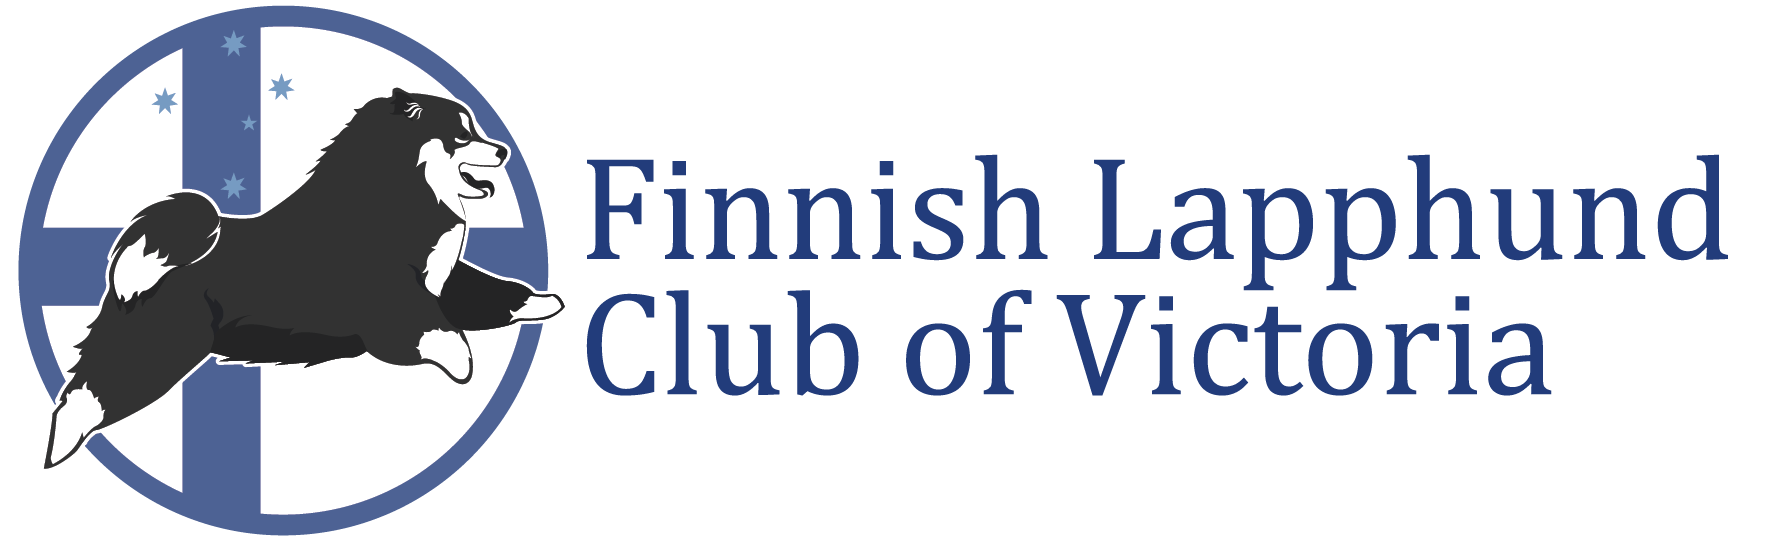 Finnish Lapphund Club of Victoria